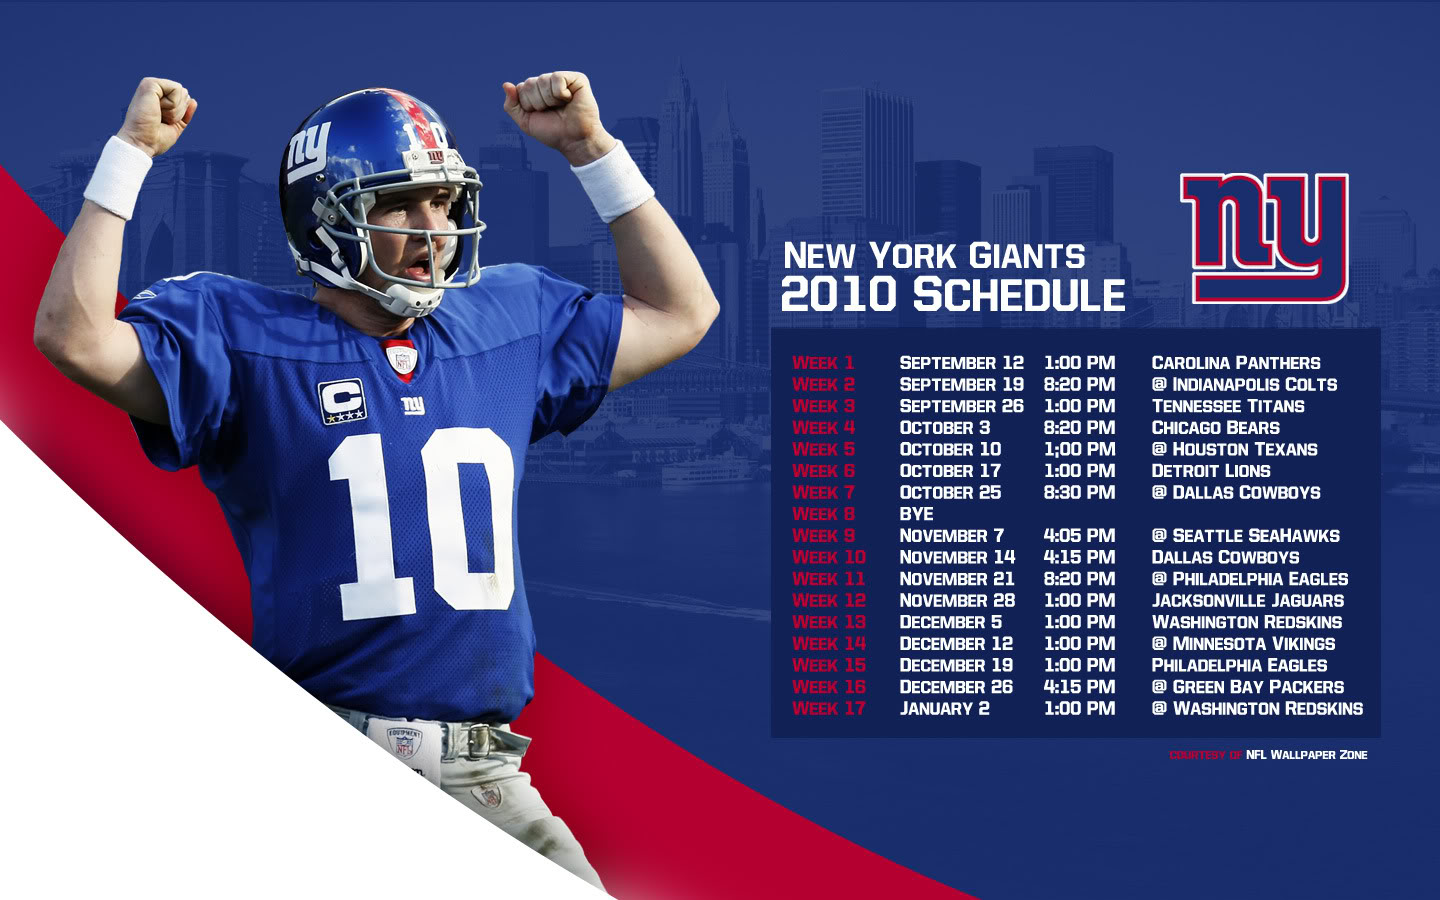 Nfl Wallpaper Zone Ny New York Giants Schedule